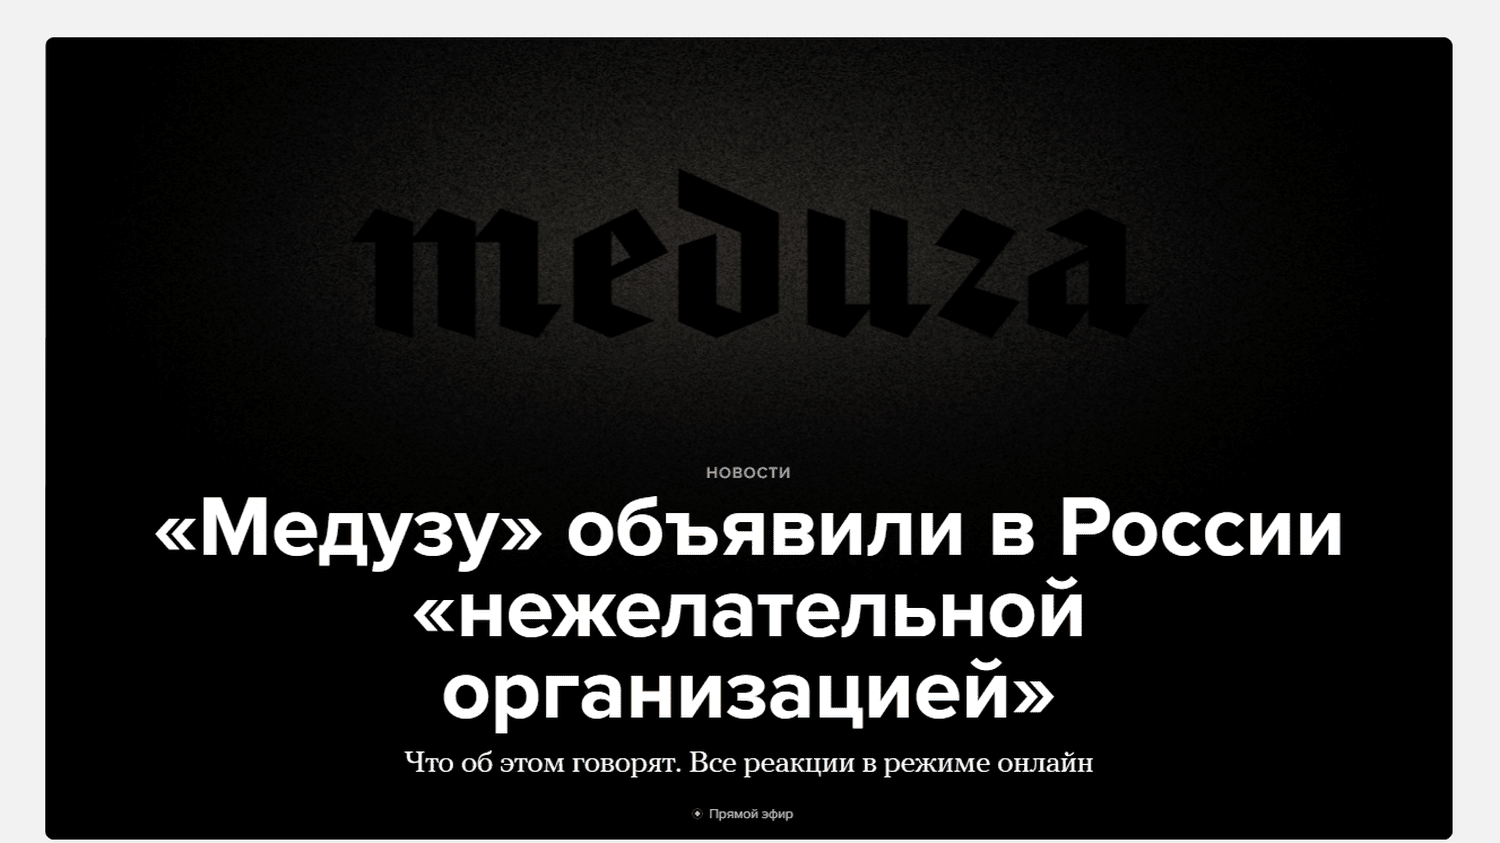 Meduza, the largest independent Russian-language media, declared 